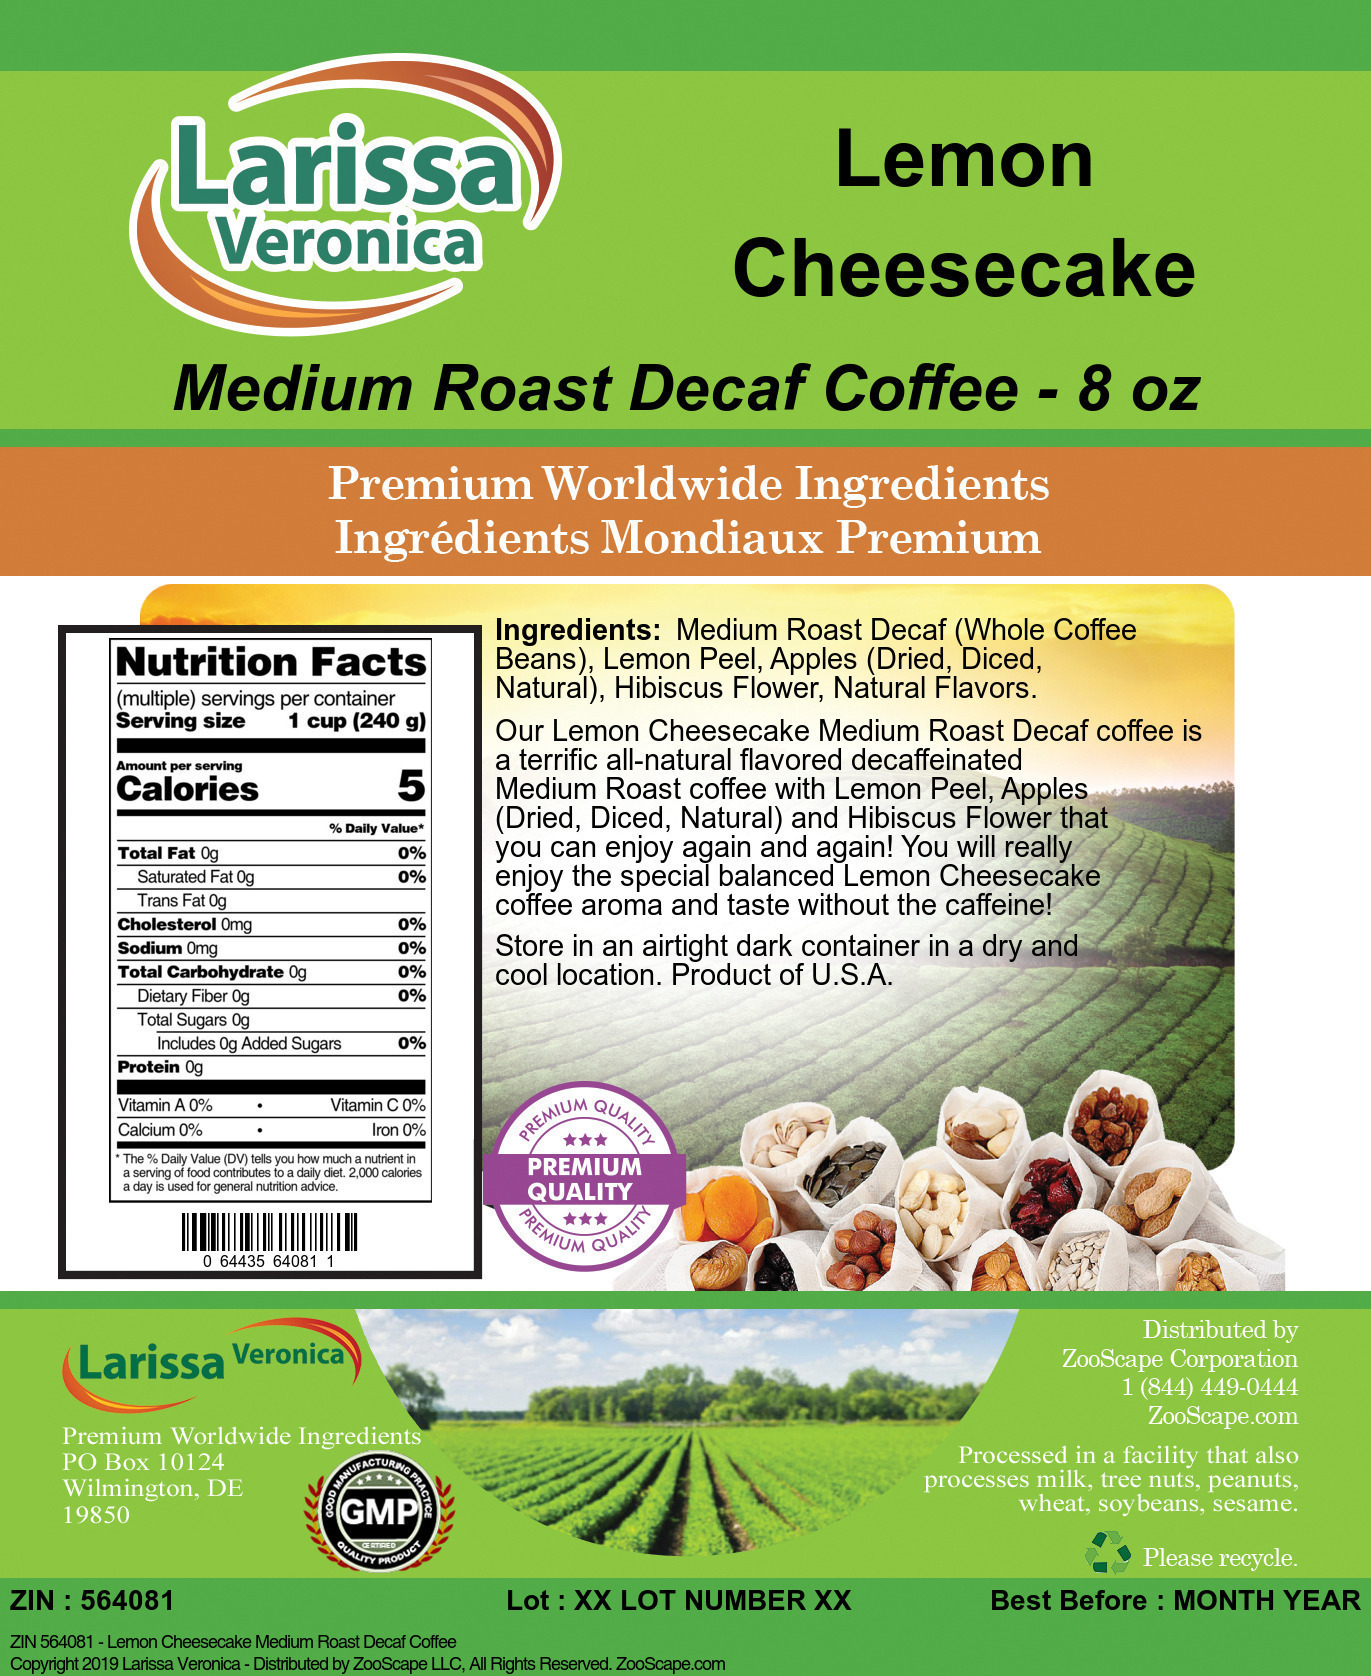 Lemon Cheesecake Medium Roast Decaf Coffee - Label